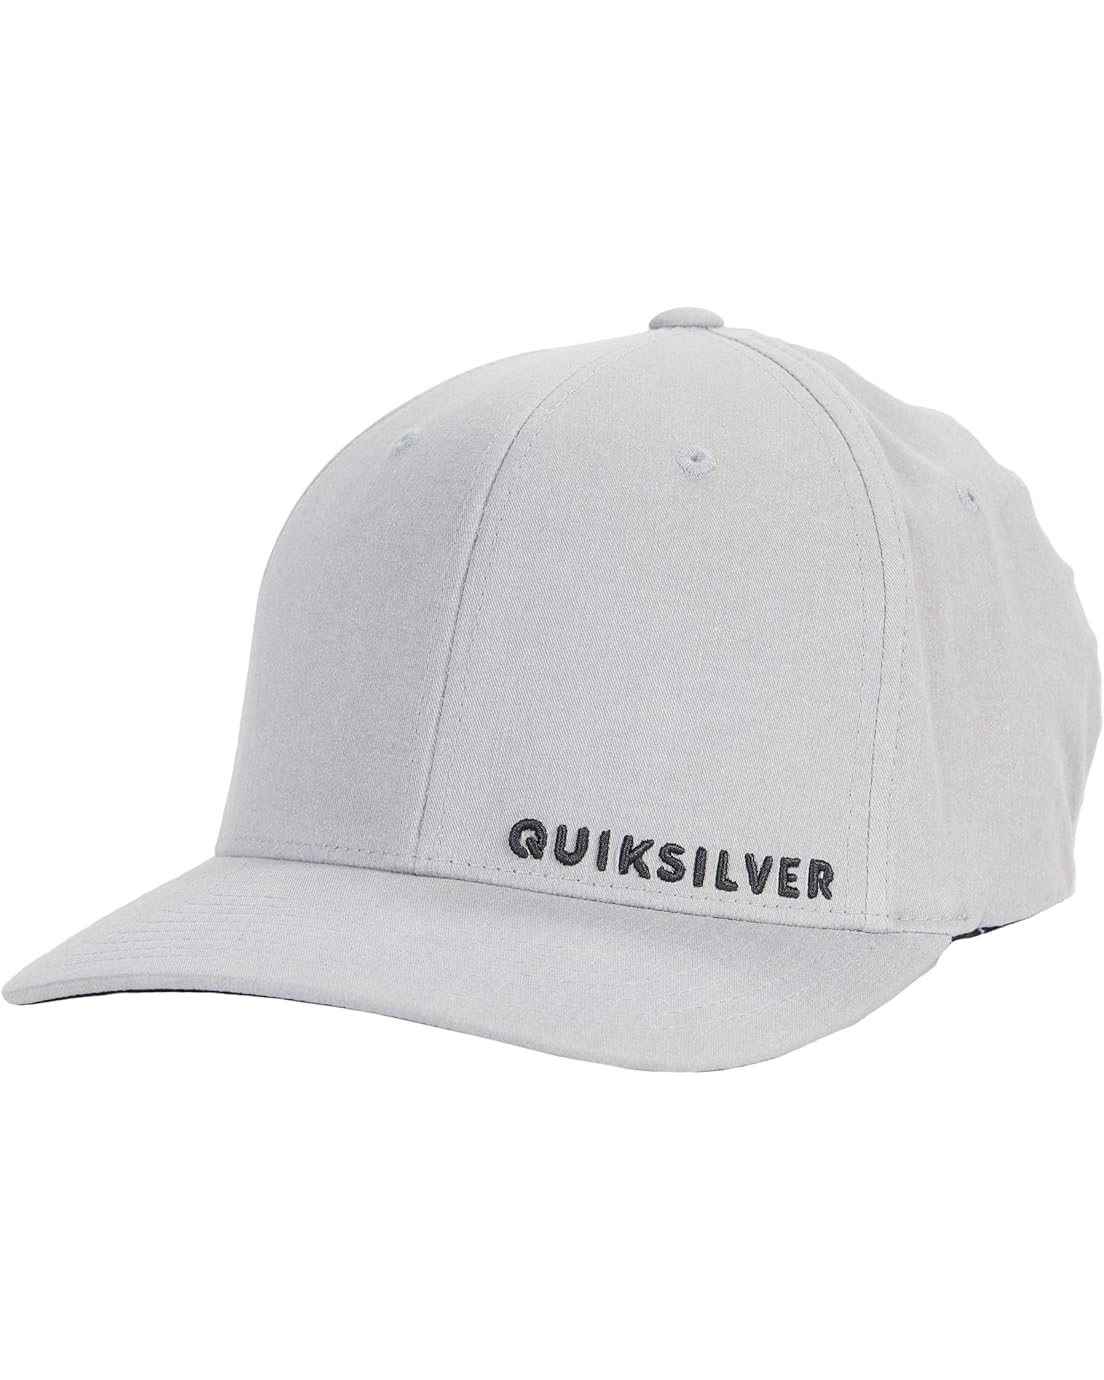 Quiksilver Sidestay